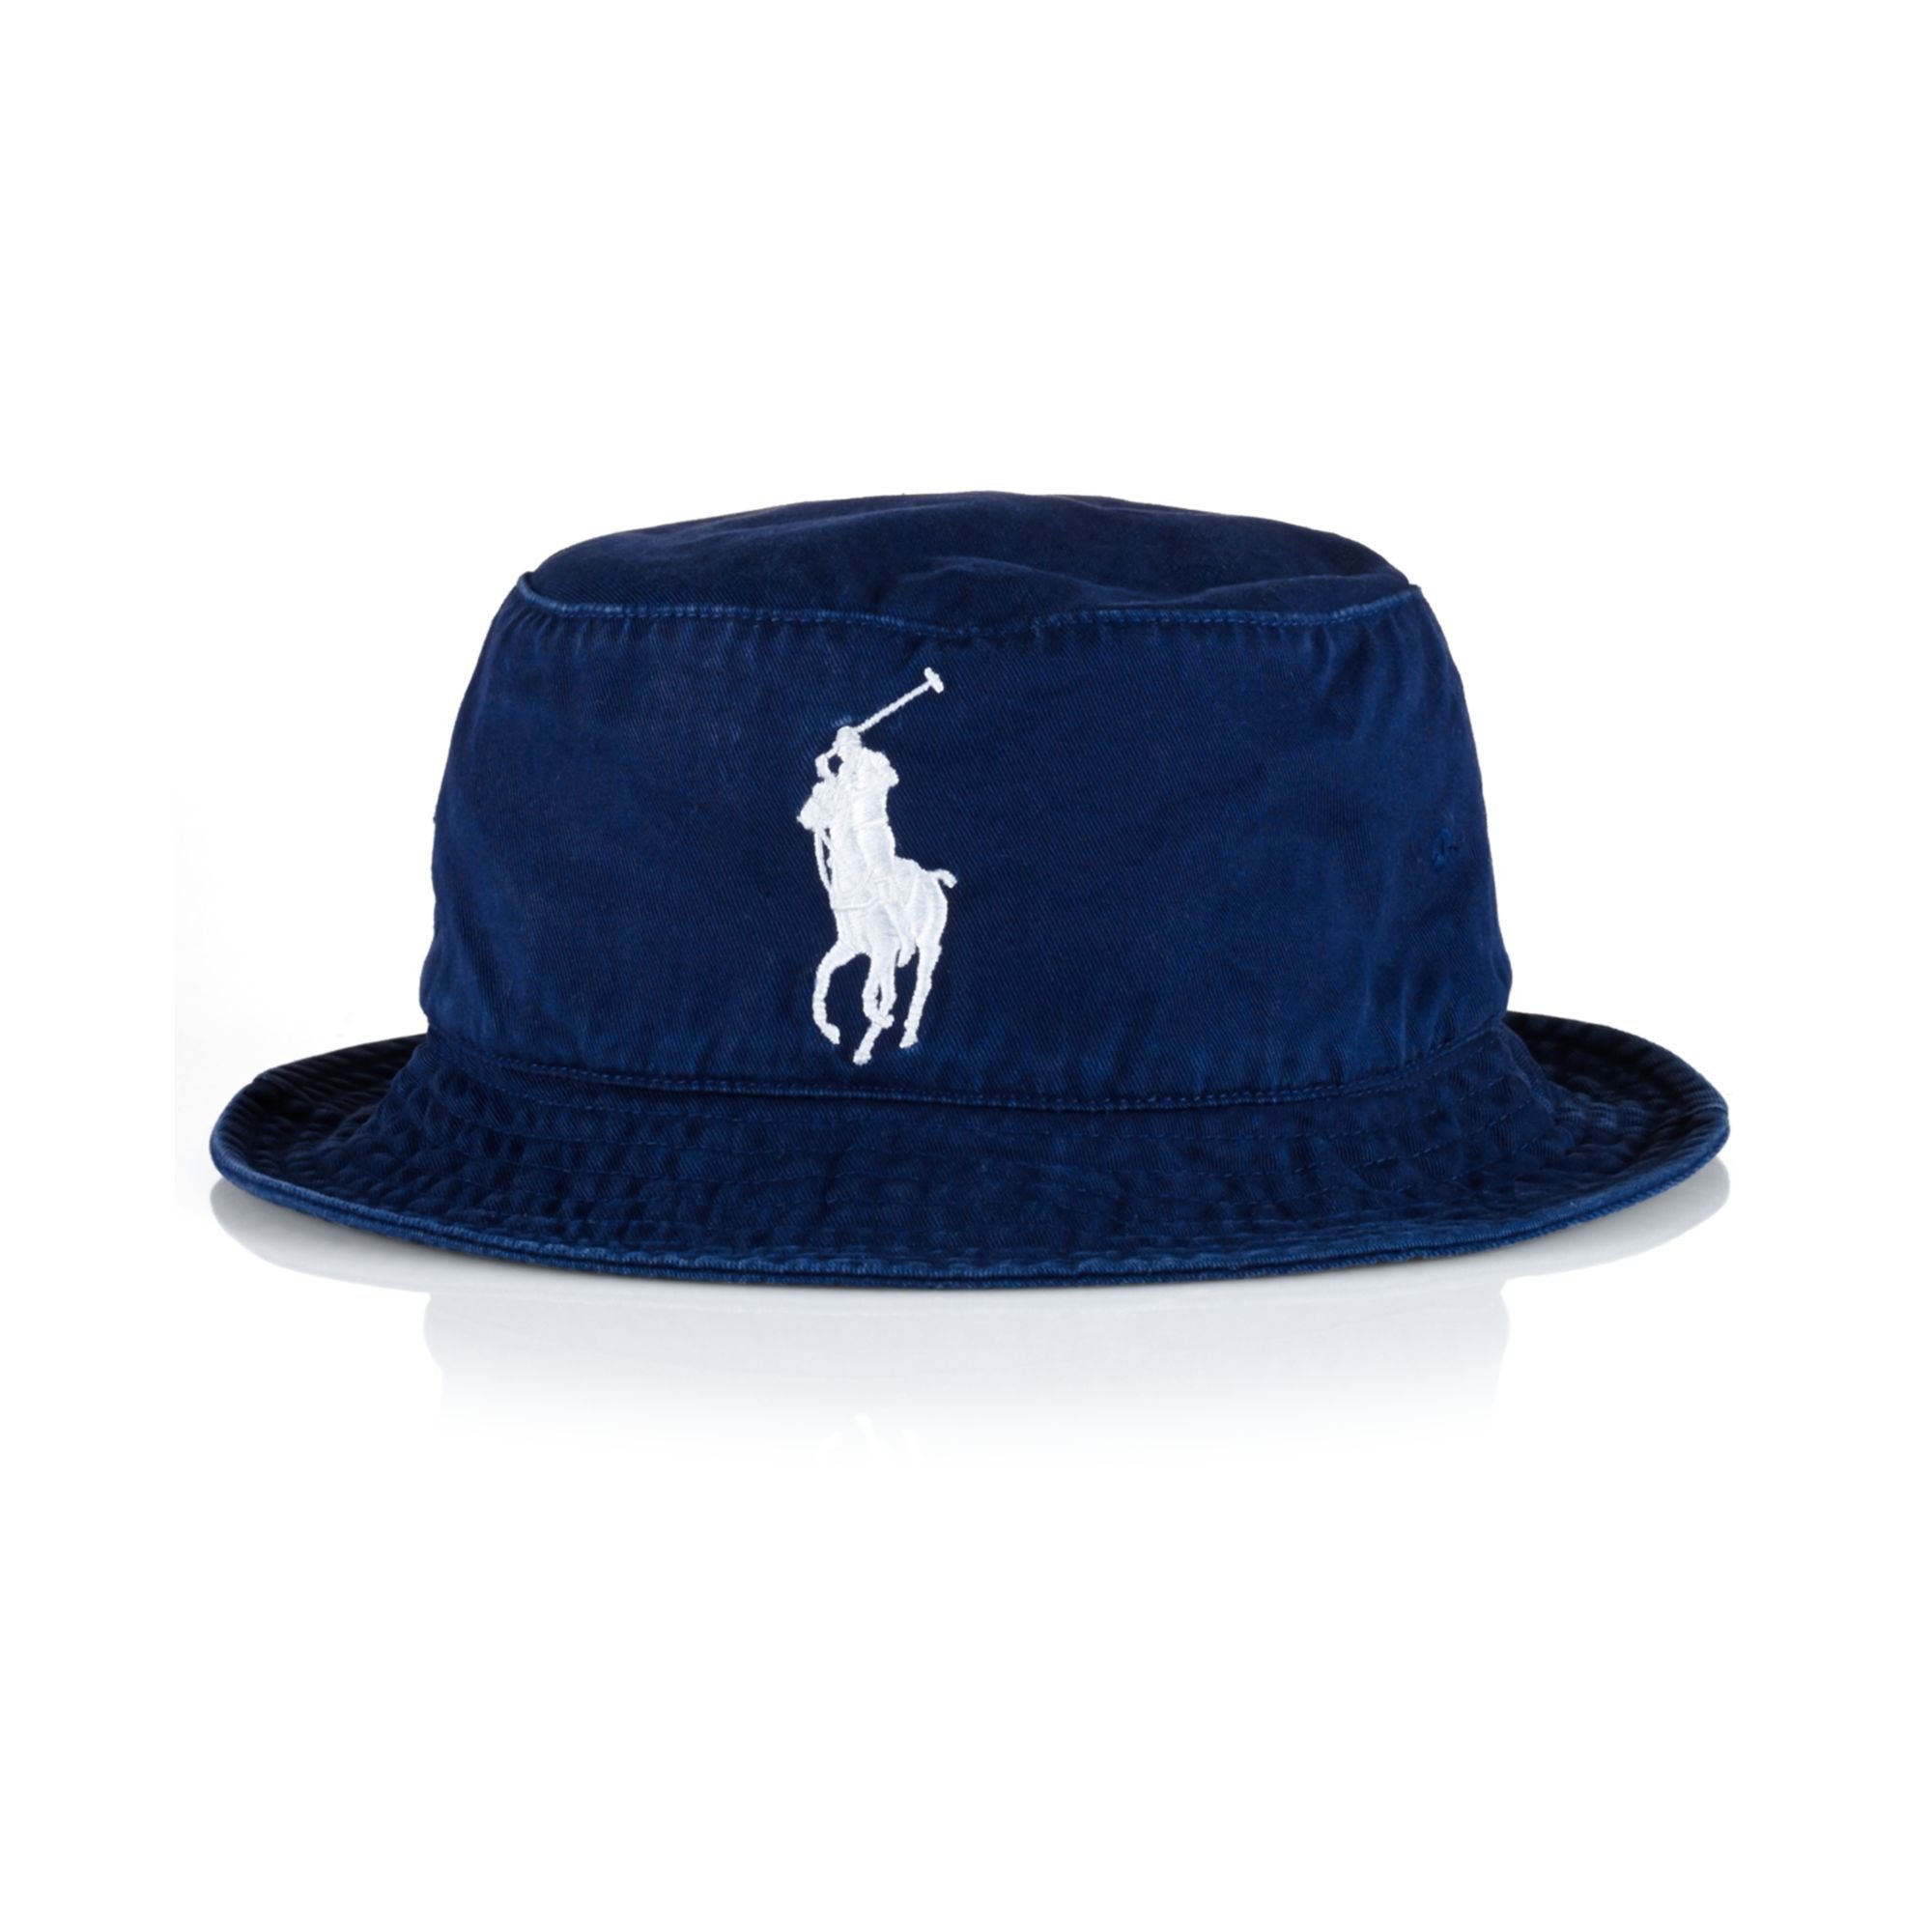 Ralph Lauren Polo Us Open Bucket Hat in French Navy (Blue) for Men - Lyst